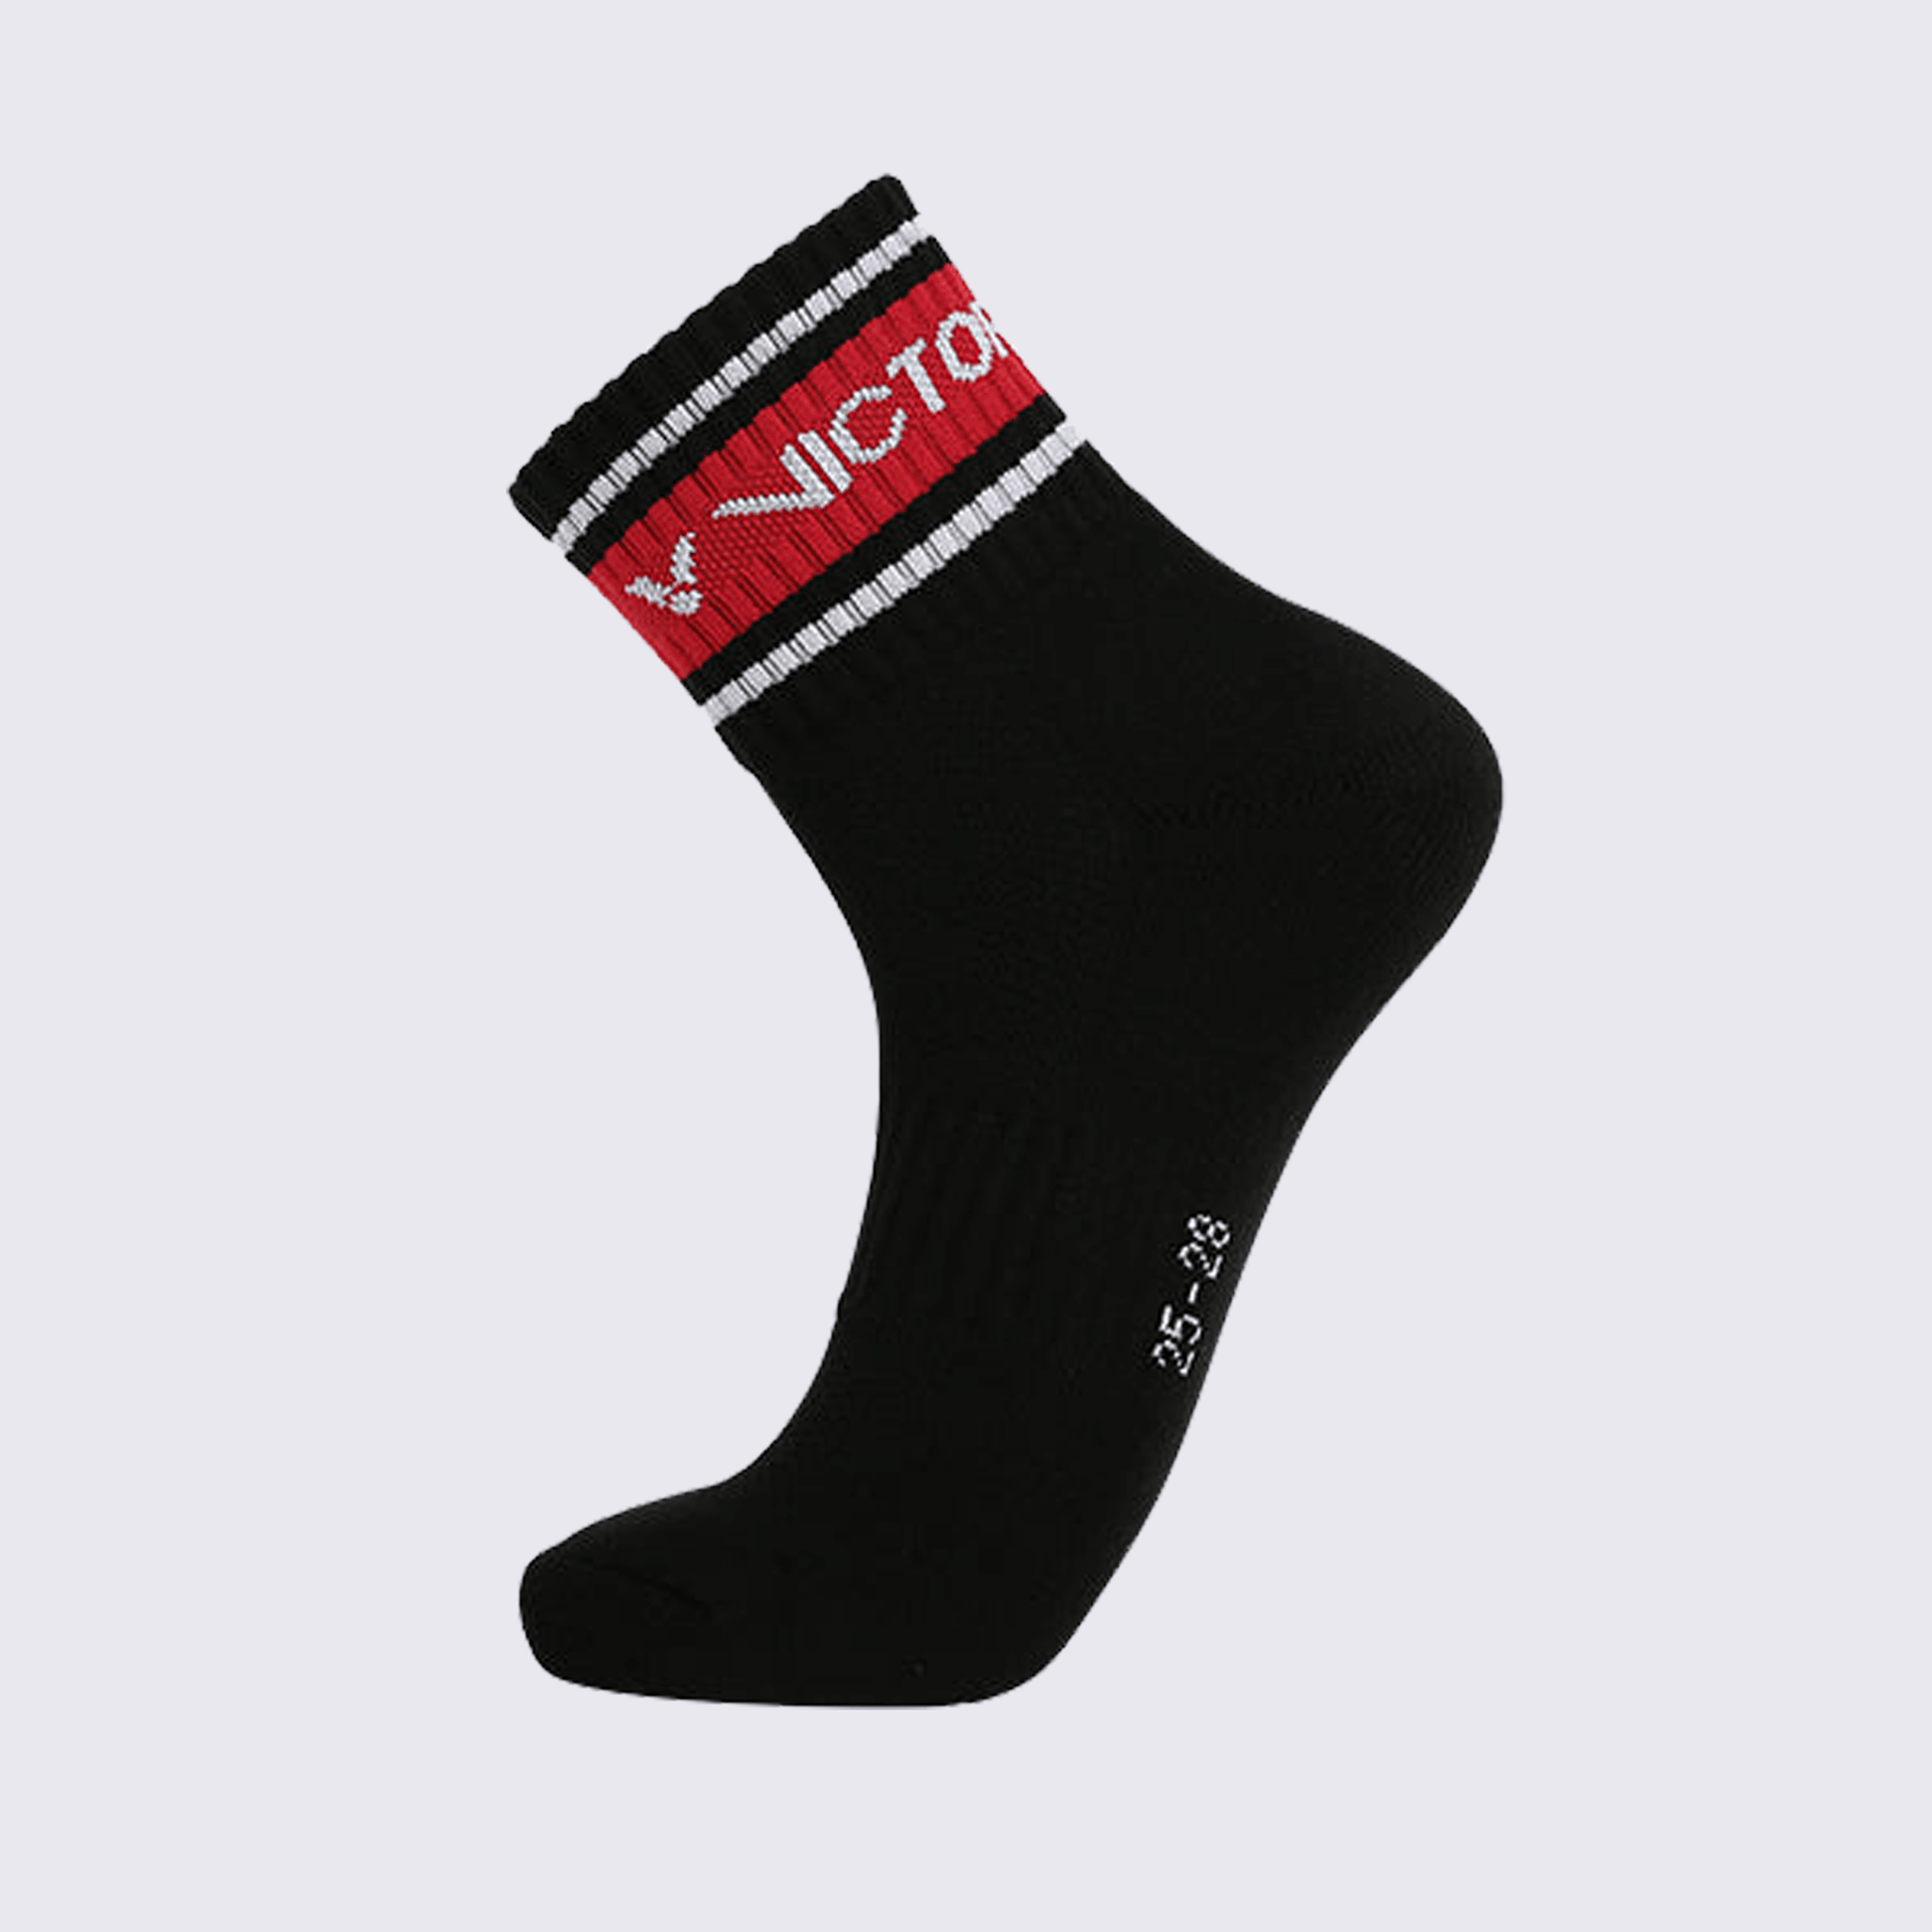 Victor Sports Socks Large SK156C (Black)